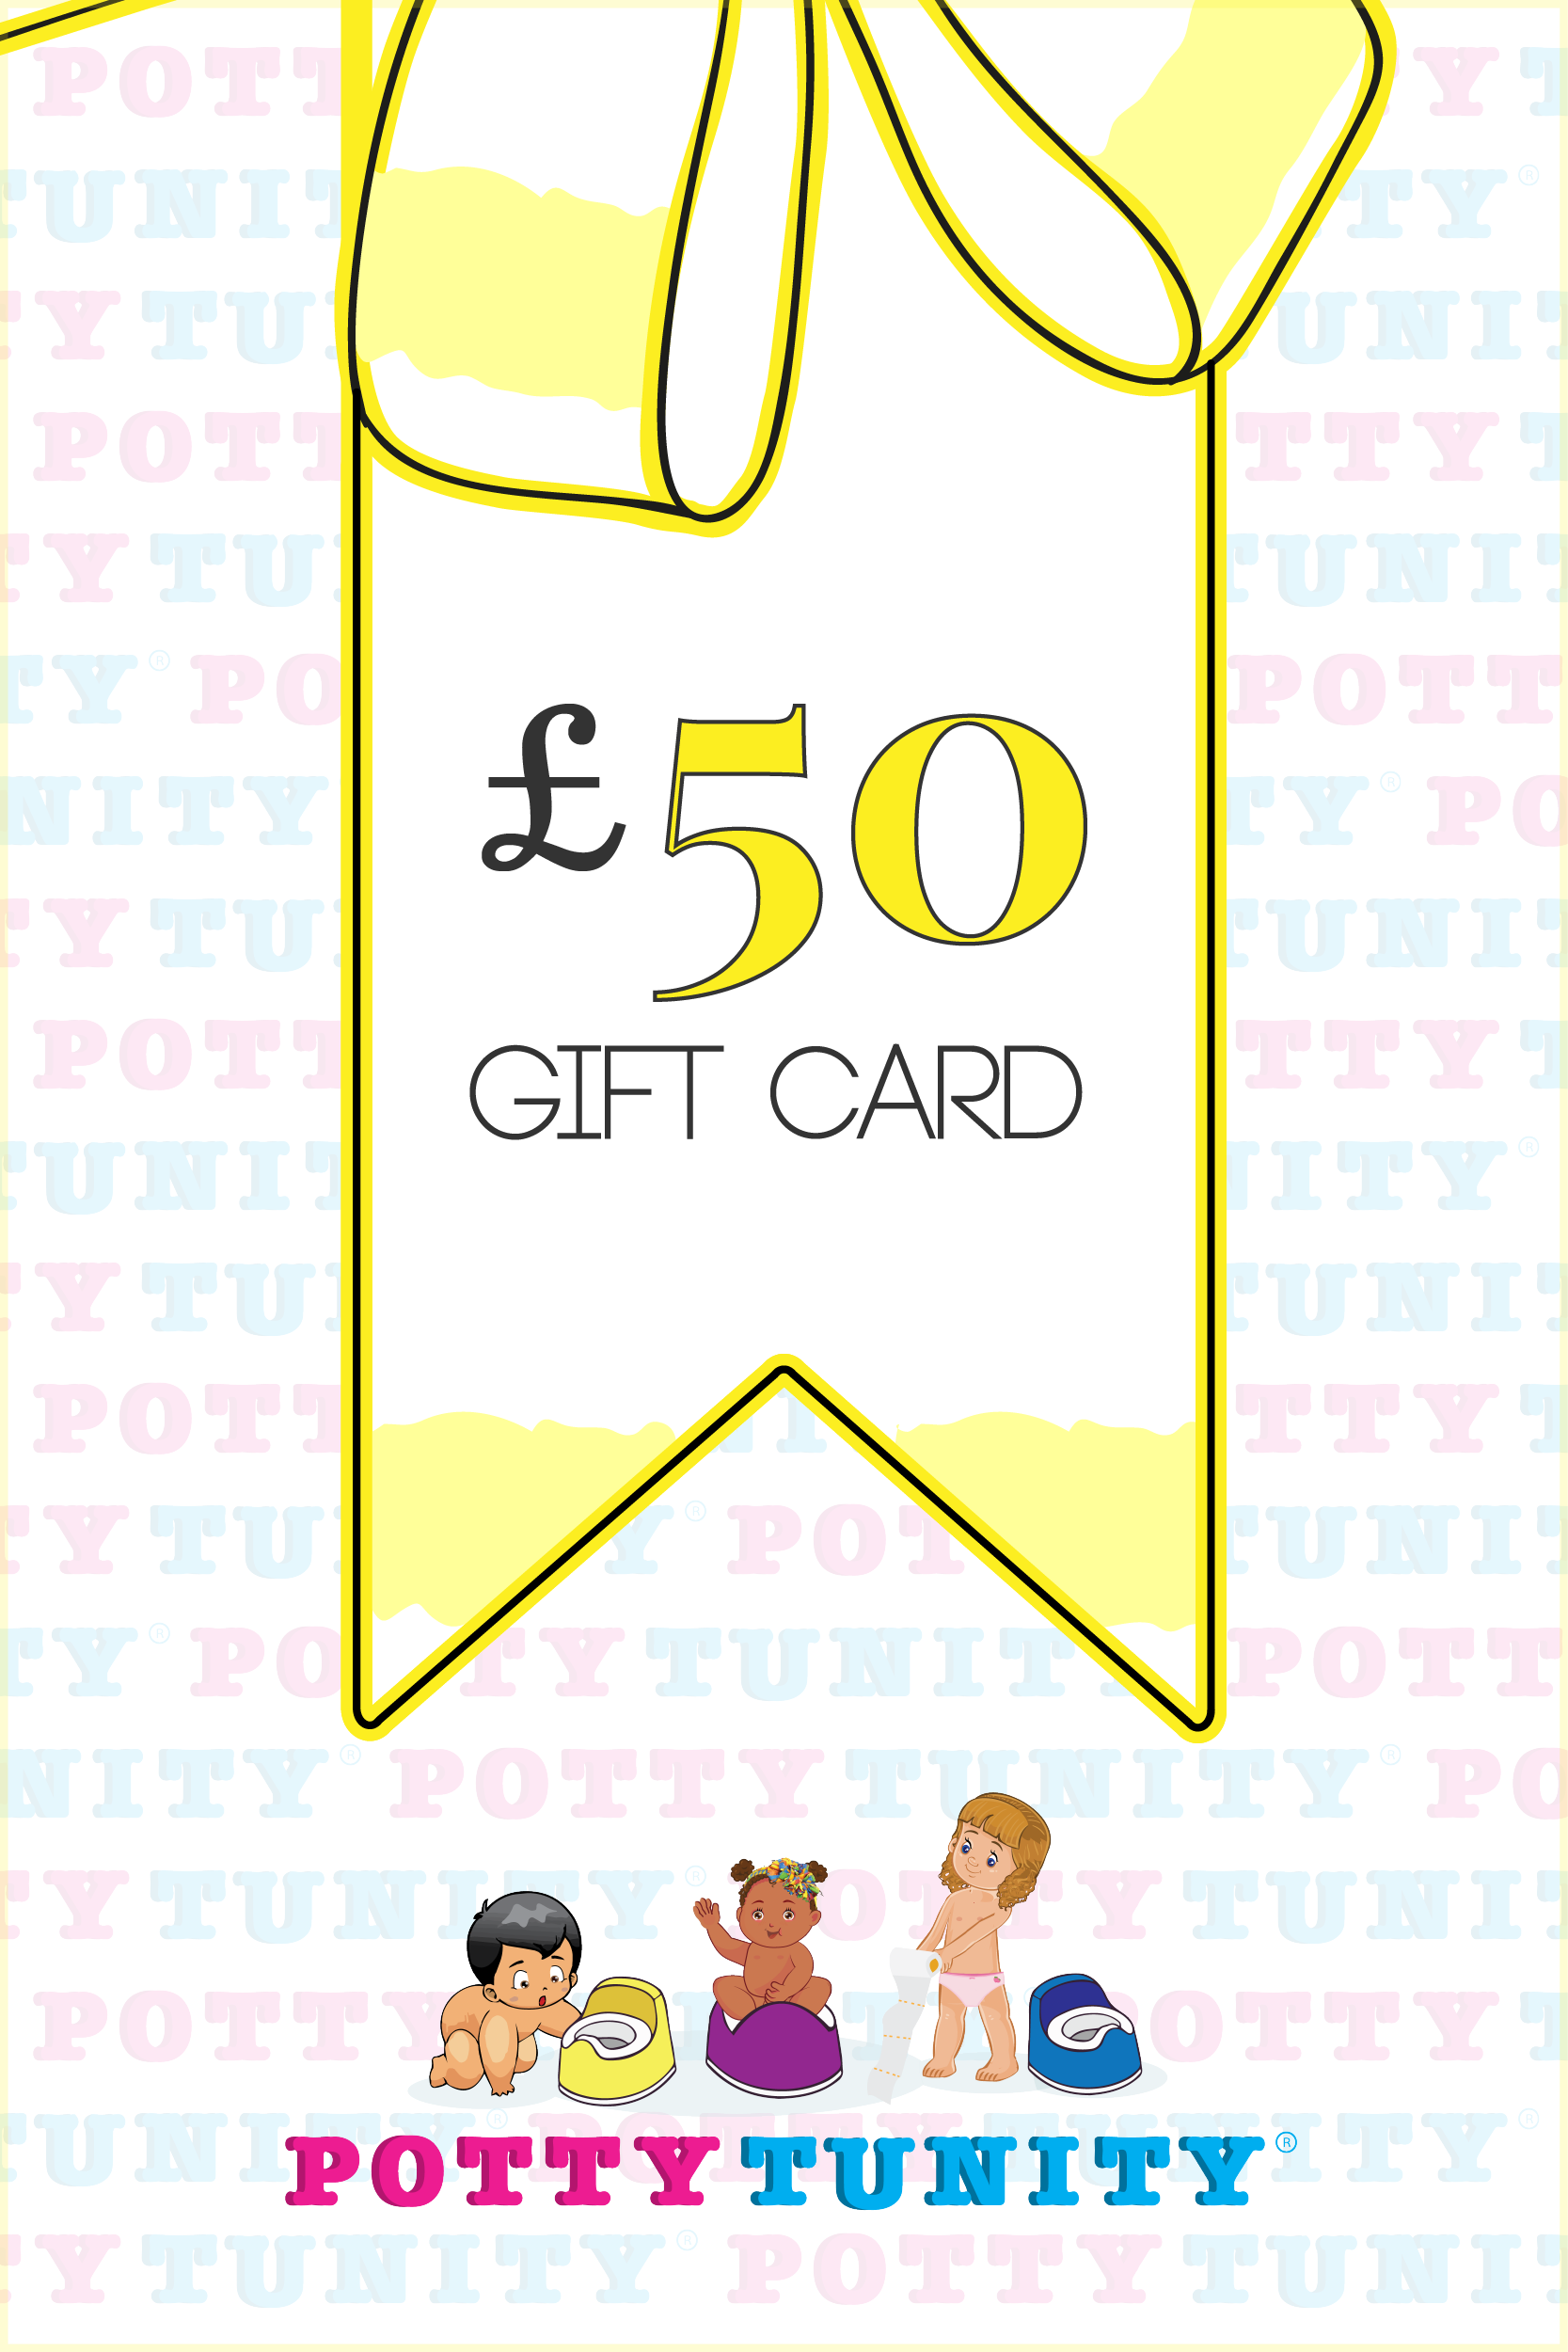 £50 GIFT CARD